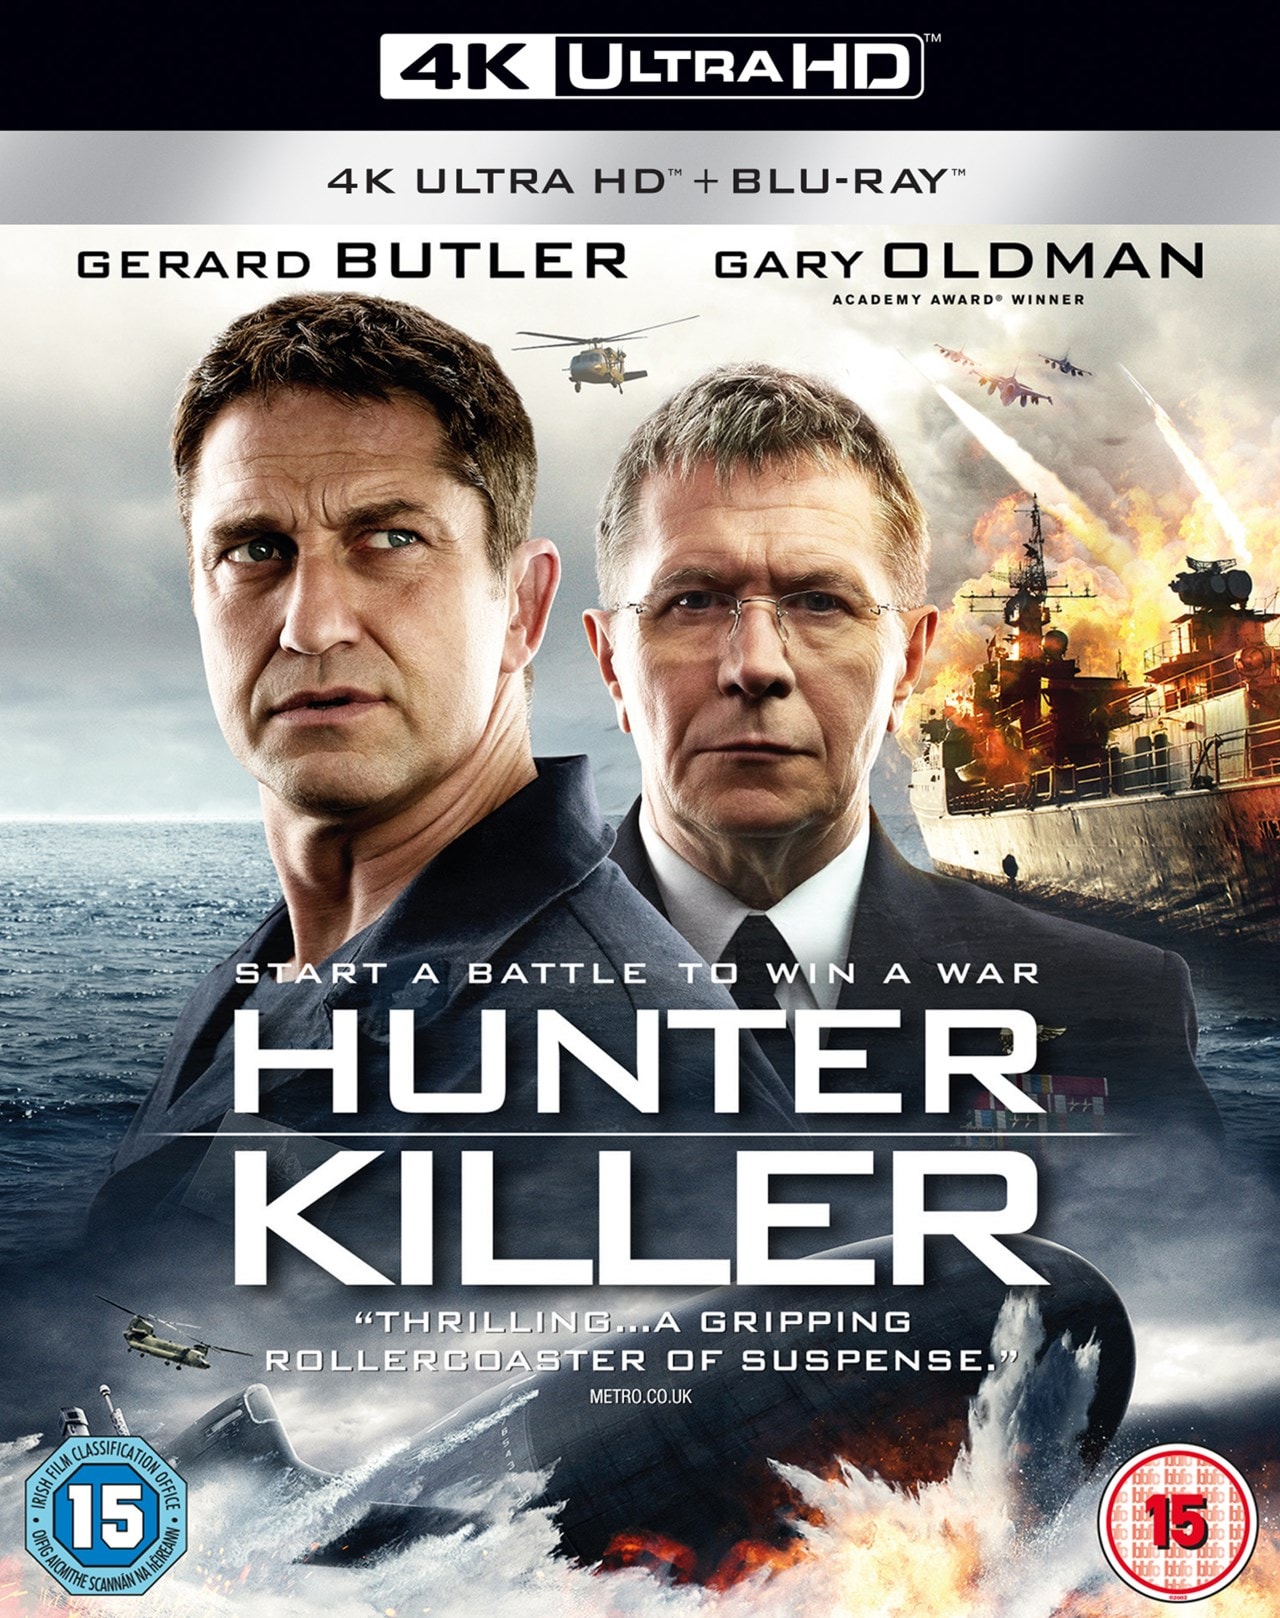 Hunt killer. Хантер киллер (Blu-ray). Хантер киллер 2018 720p.